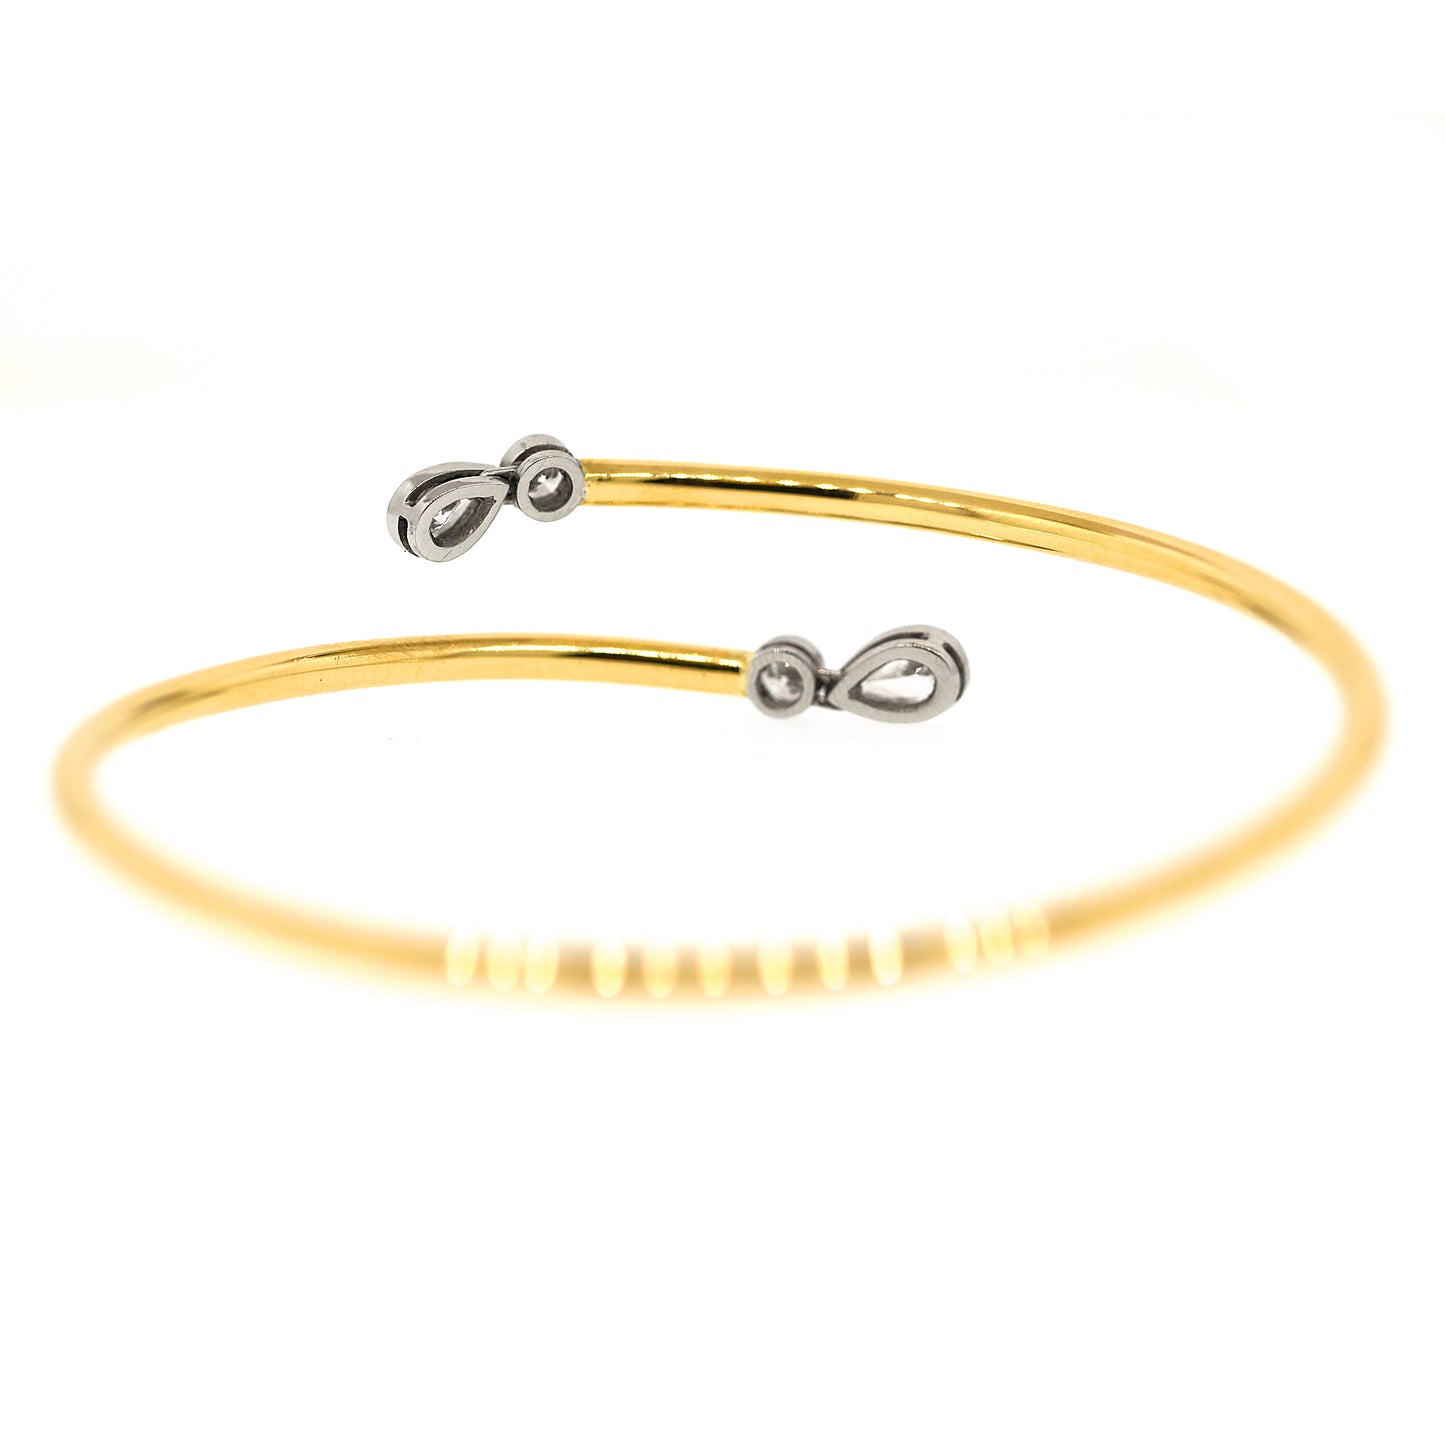 Charming 18k Yellow Gold and Platinum Diamond Slip-on Bracelet